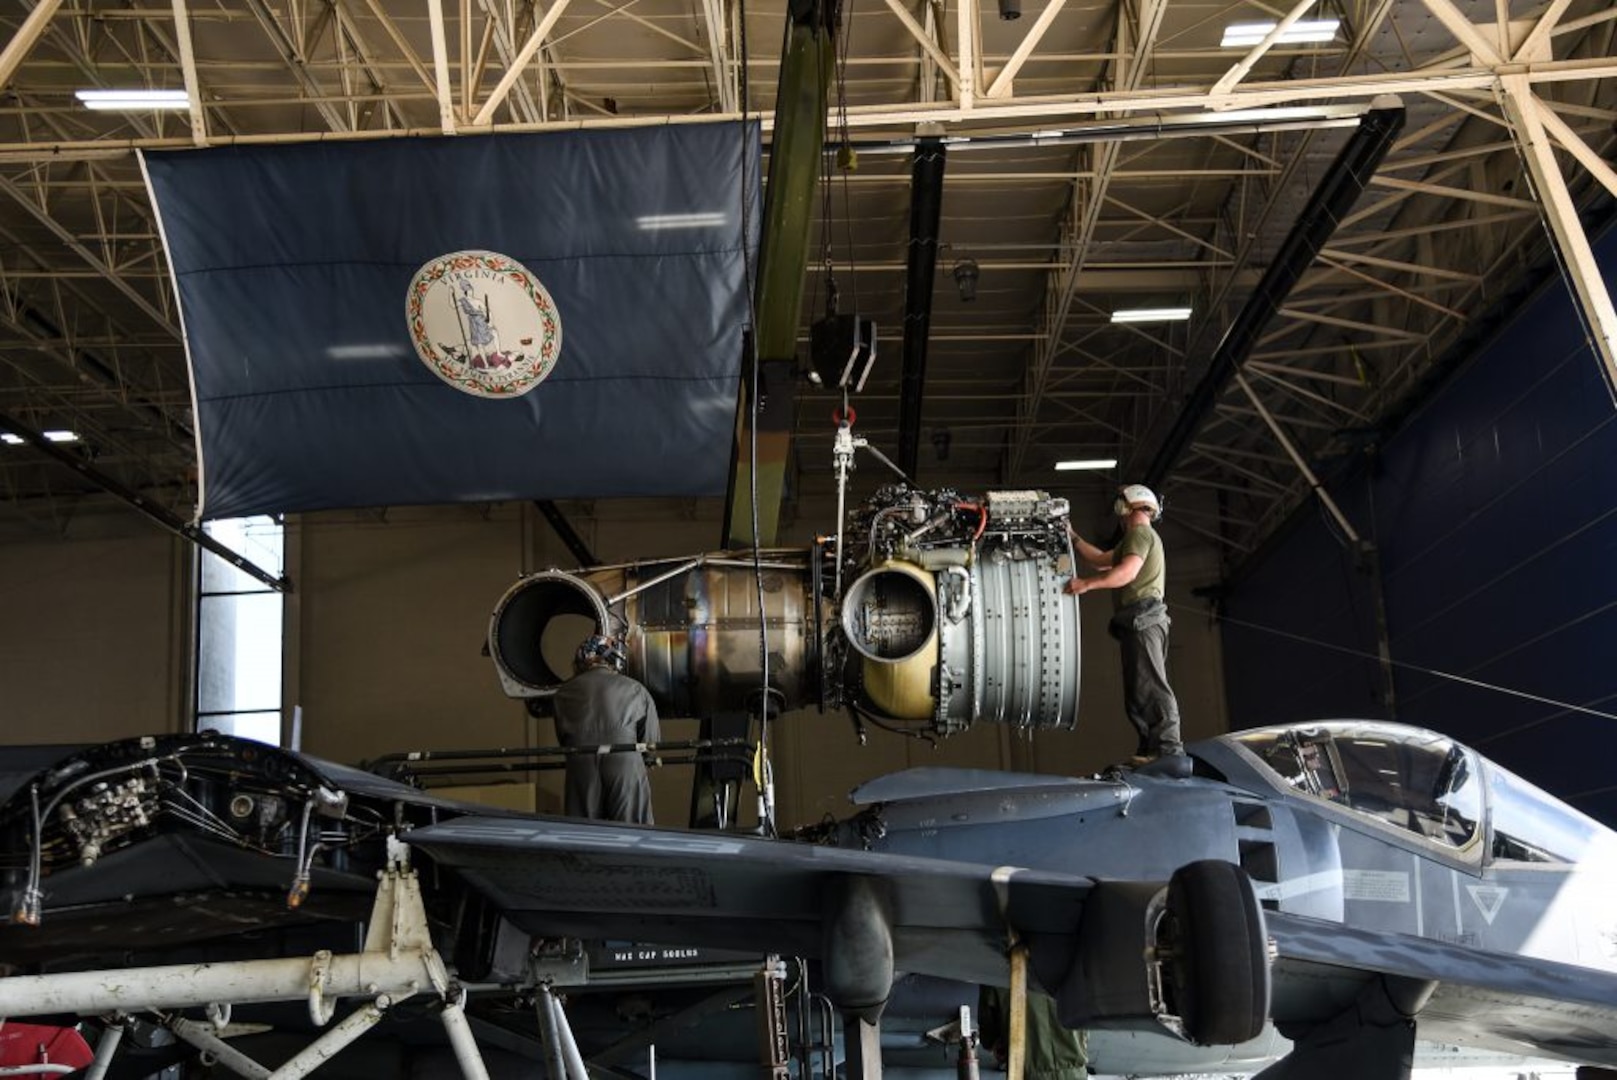 Marines repair Harrier jet engine at Va. Guard aviation facility